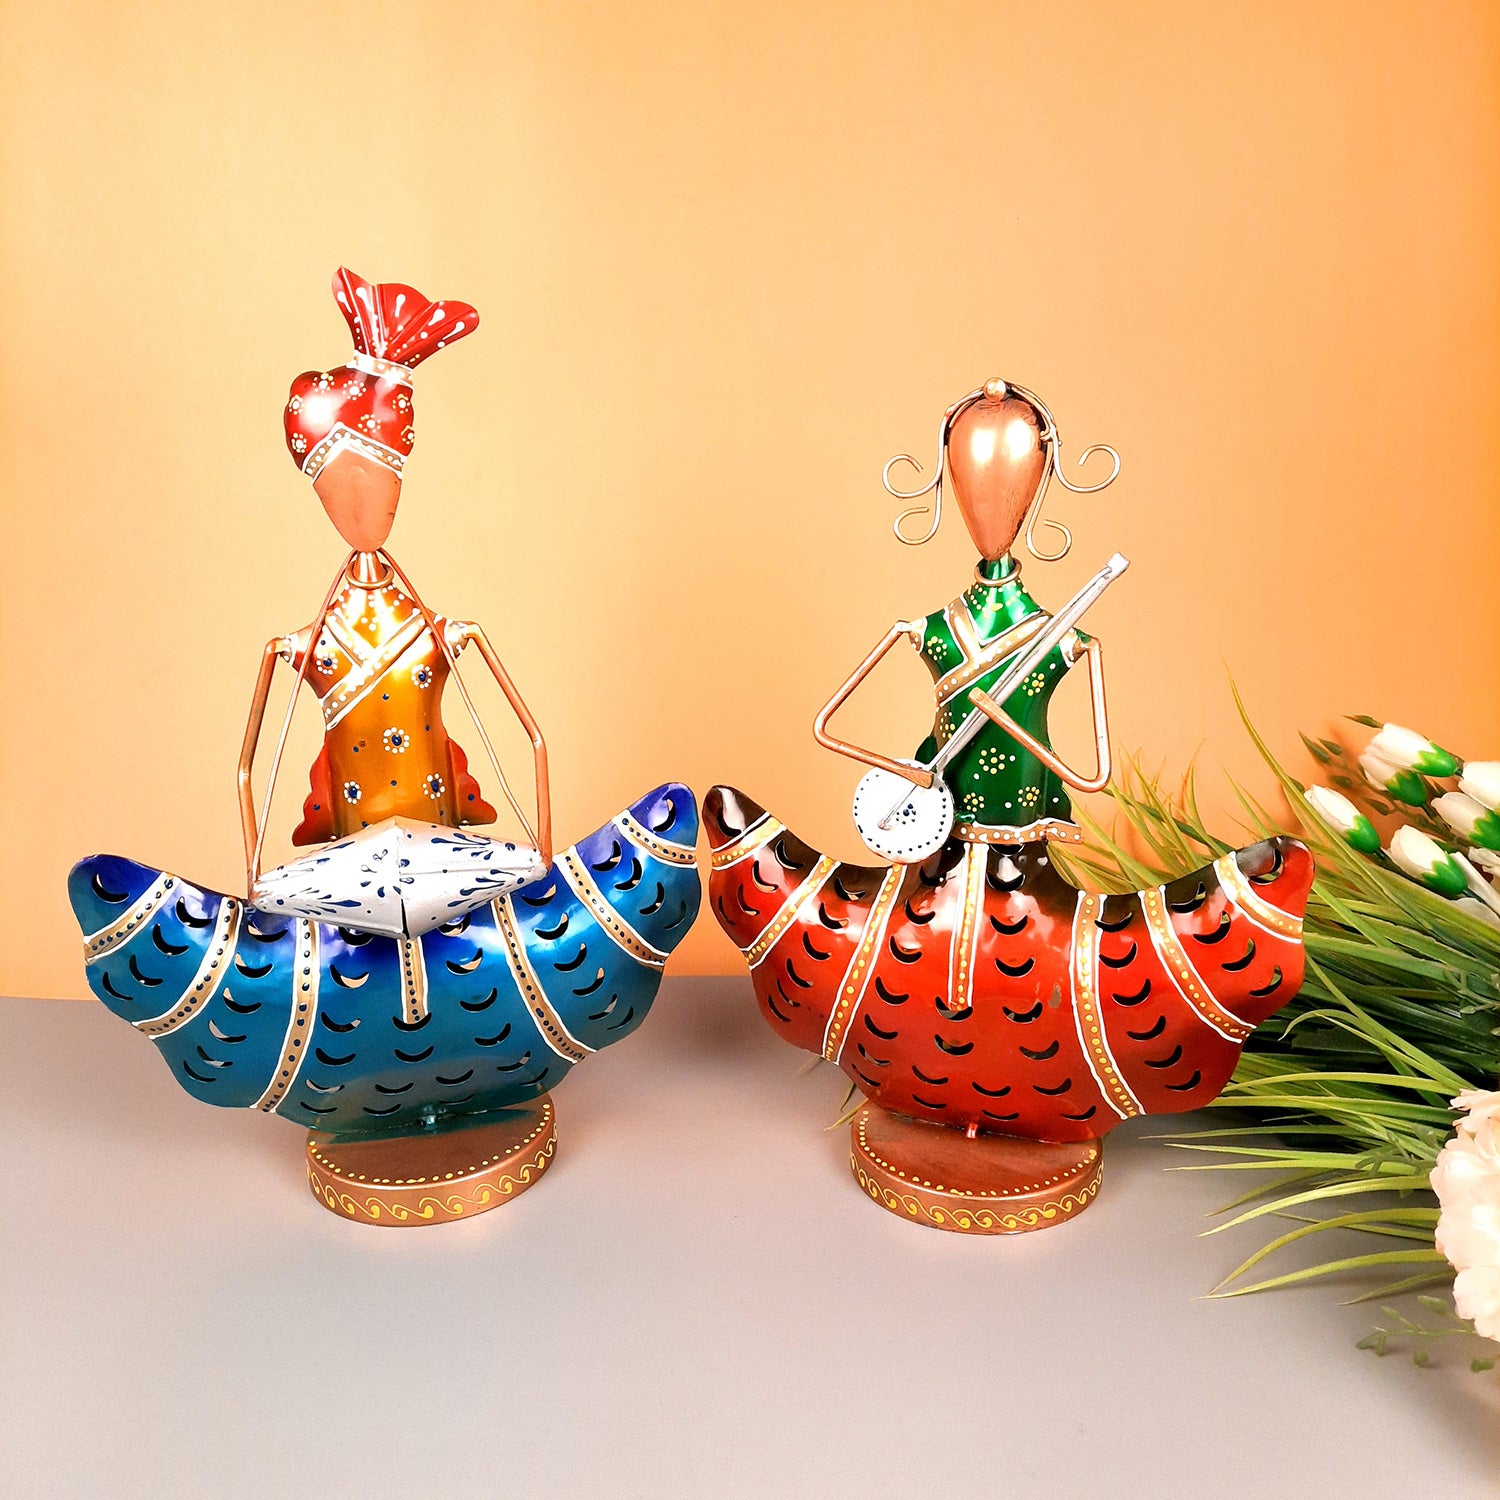 Tea Light Candle Holders - Musician Design | T Light Holder Cum Decorative Showpiece - For Table, Living Room, Shelf Decor & Gift - 14 Inch (Set of 2) - apkamart